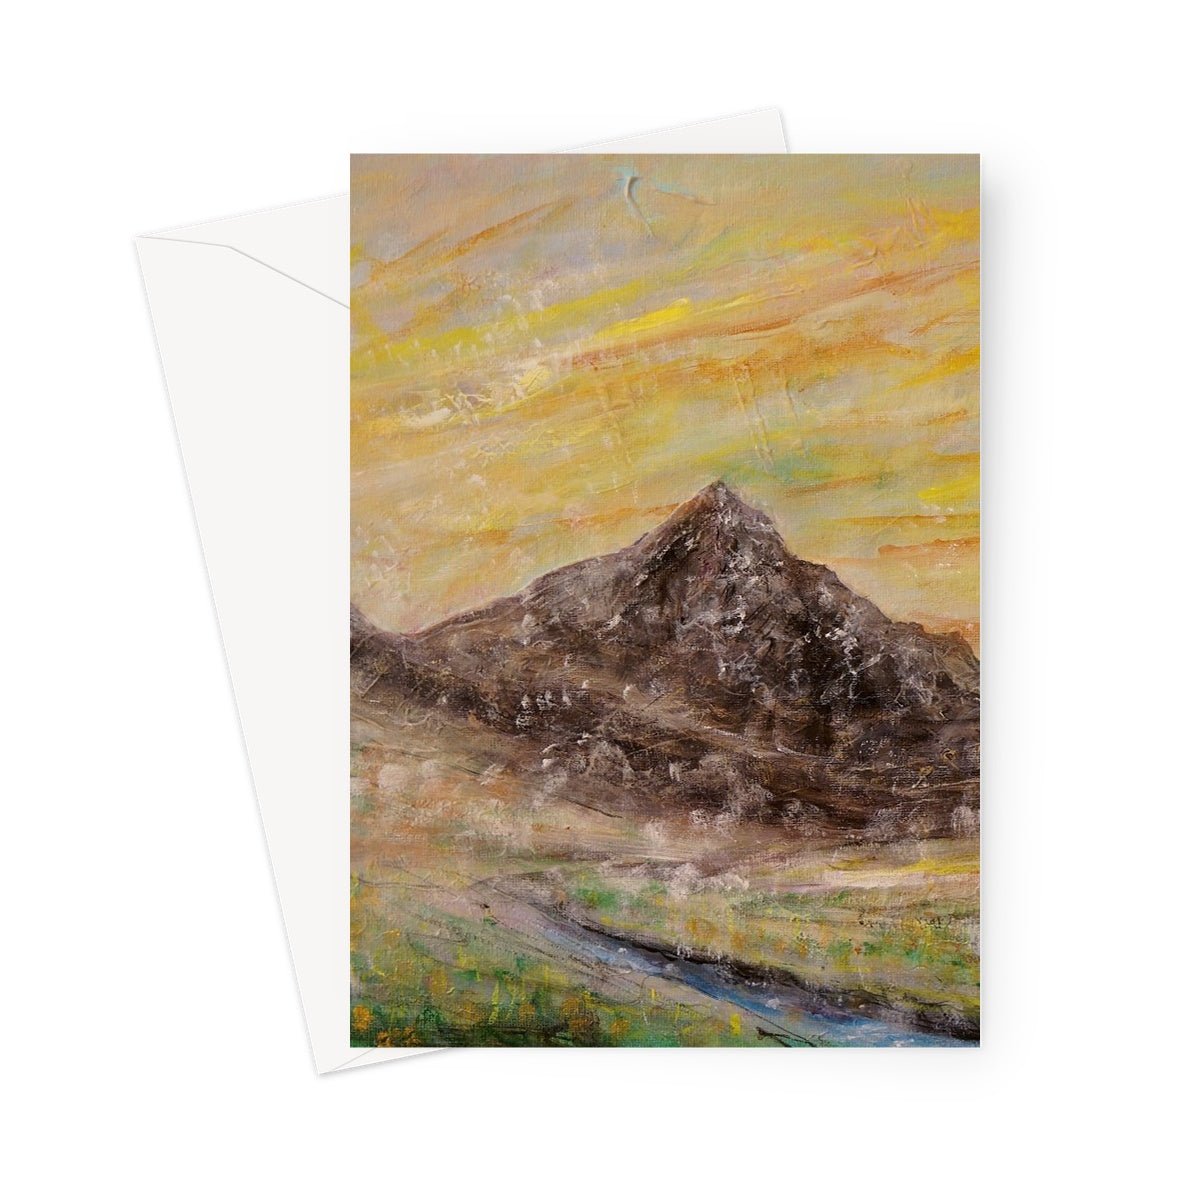 Glen Rosa Mist Arran Art Gifts Greeting Card-Greetings Cards-Arran Art Gallery-5"x7"-1 Card-Paintings, Prints, Homeware, Art Gifts From Scotland By Scottish Artist Kevin Hunter